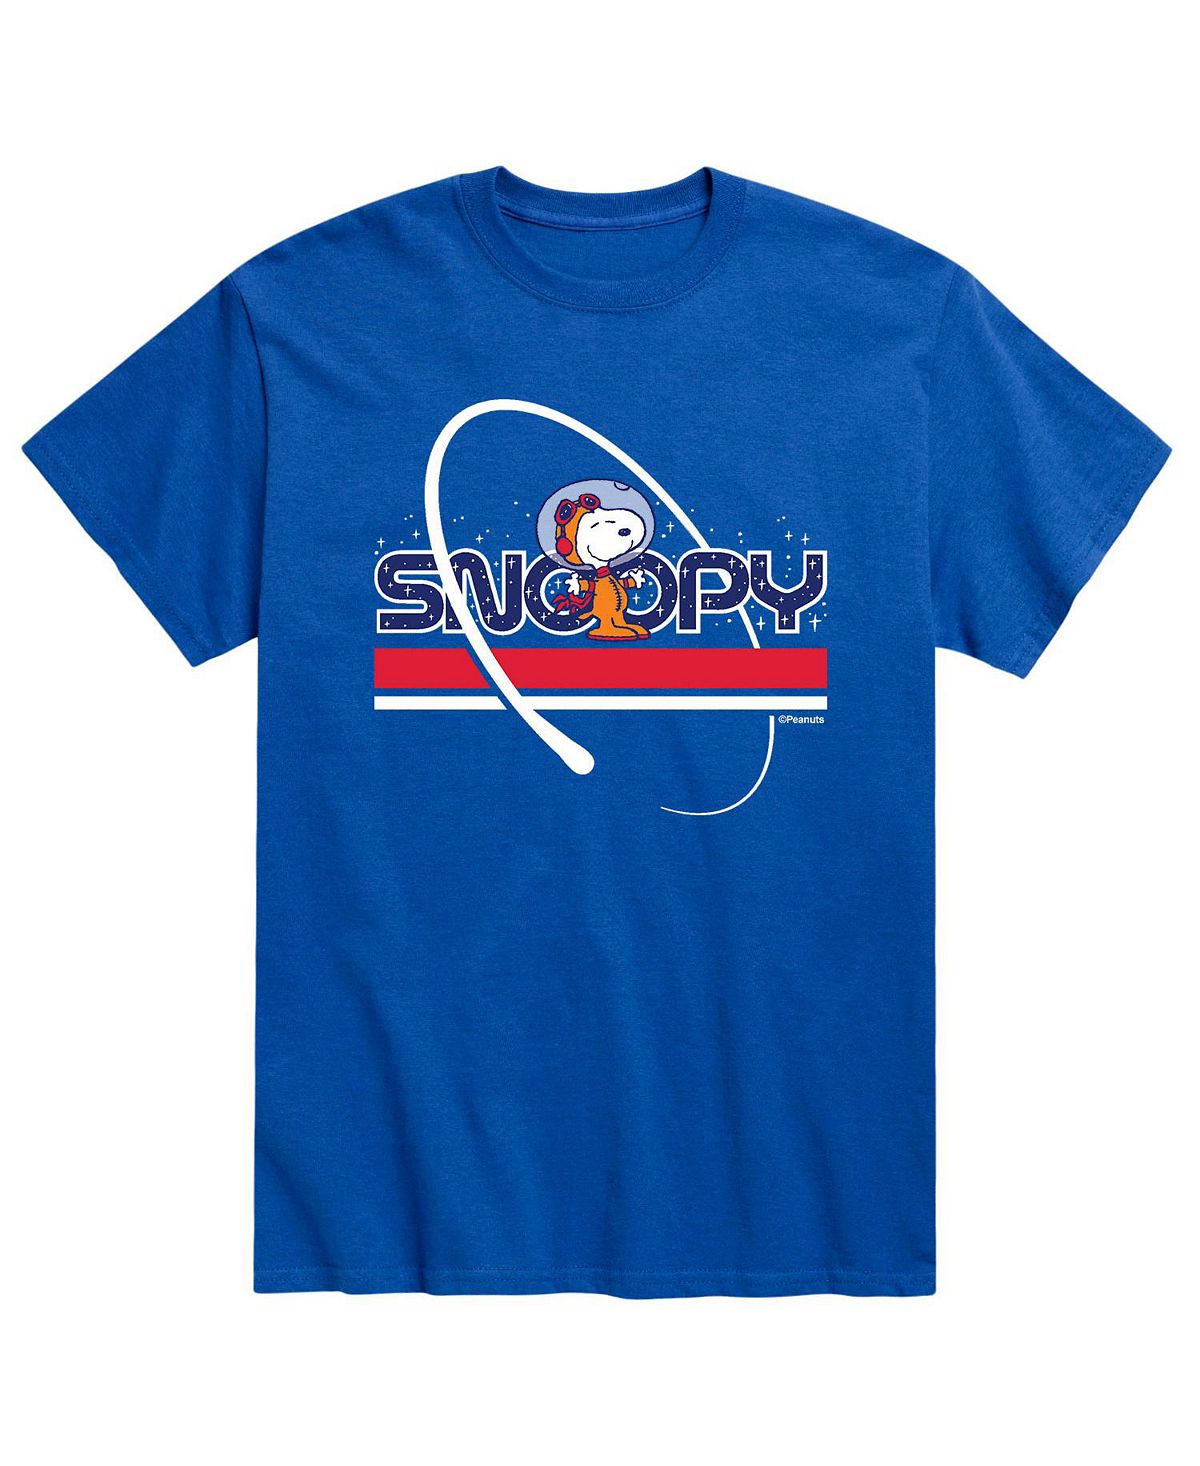 Мужская футболка peanuts snoopy space AIRWAVES, синий